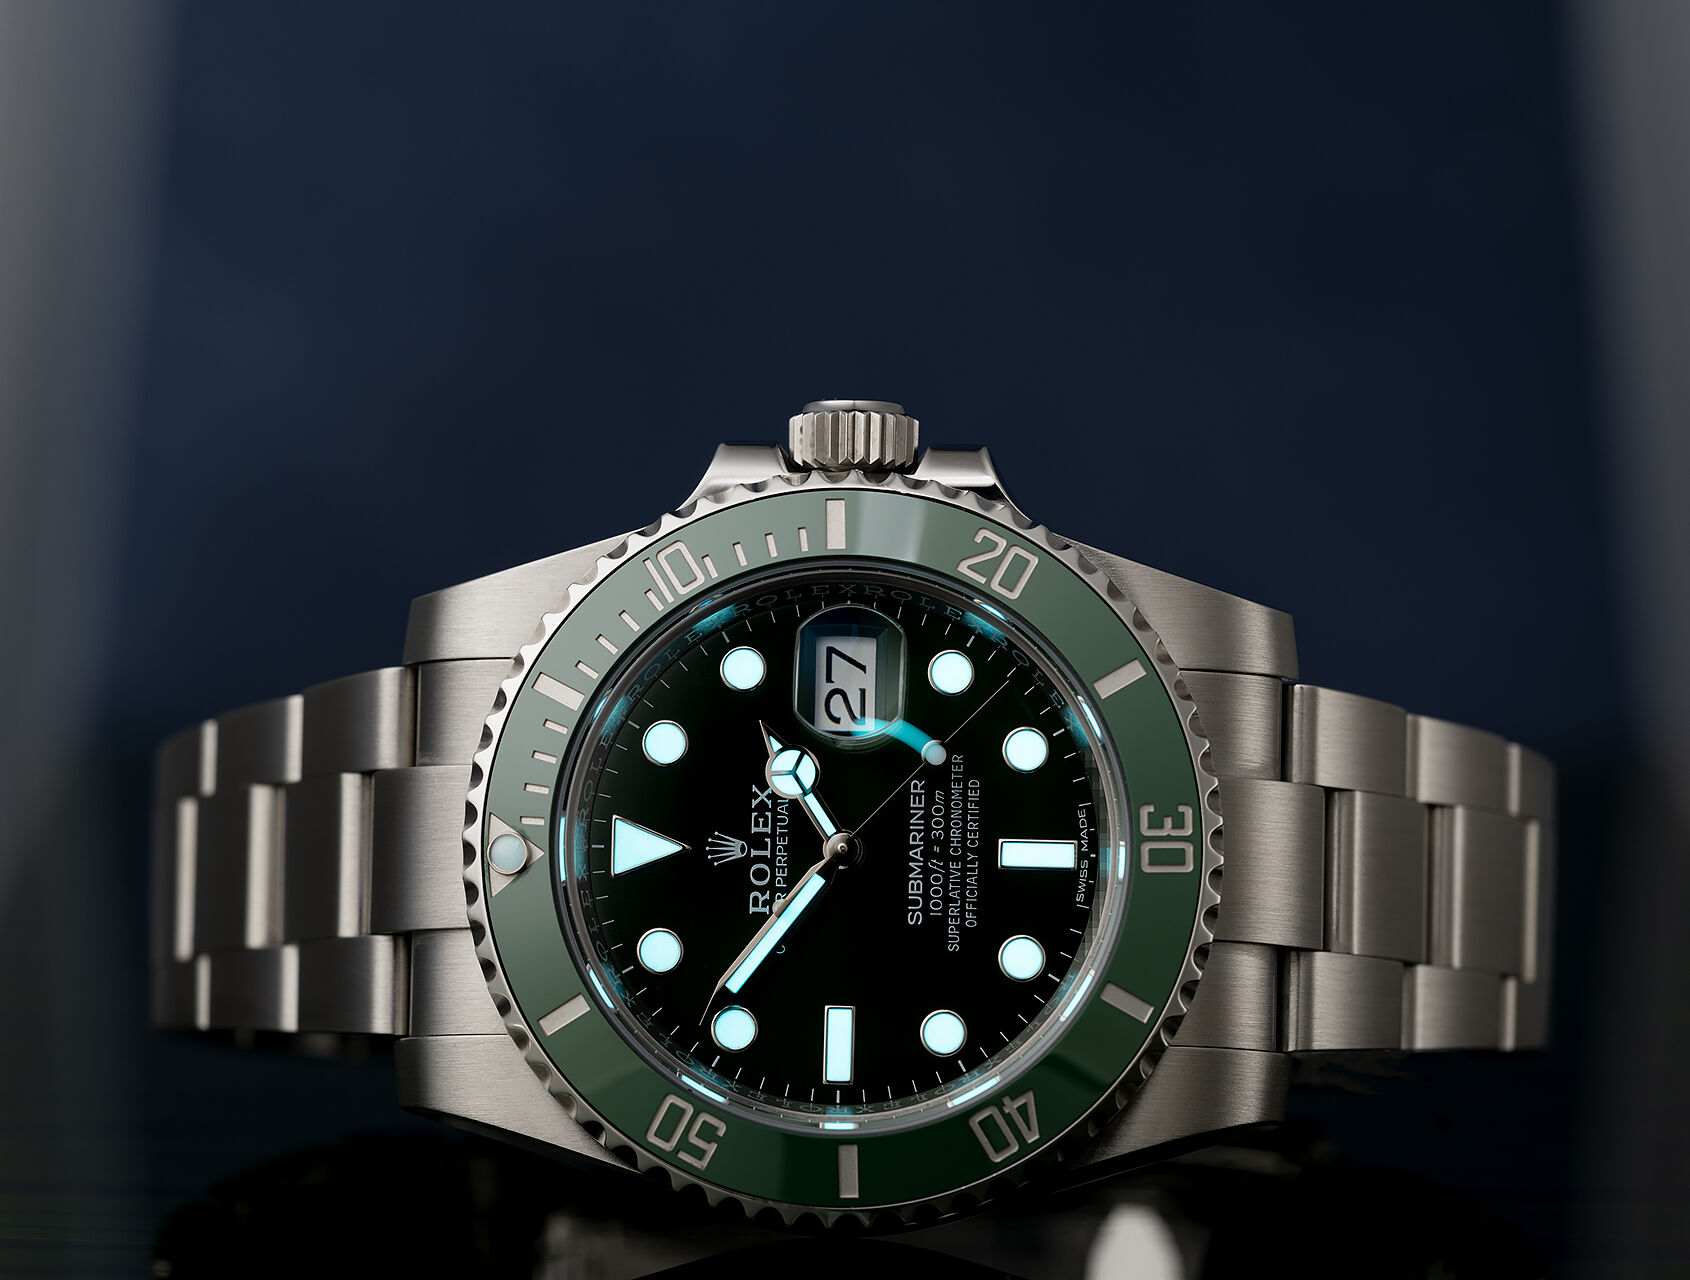 ref 116610LV | 116610LV - Hulk | Rolex Submariner Date